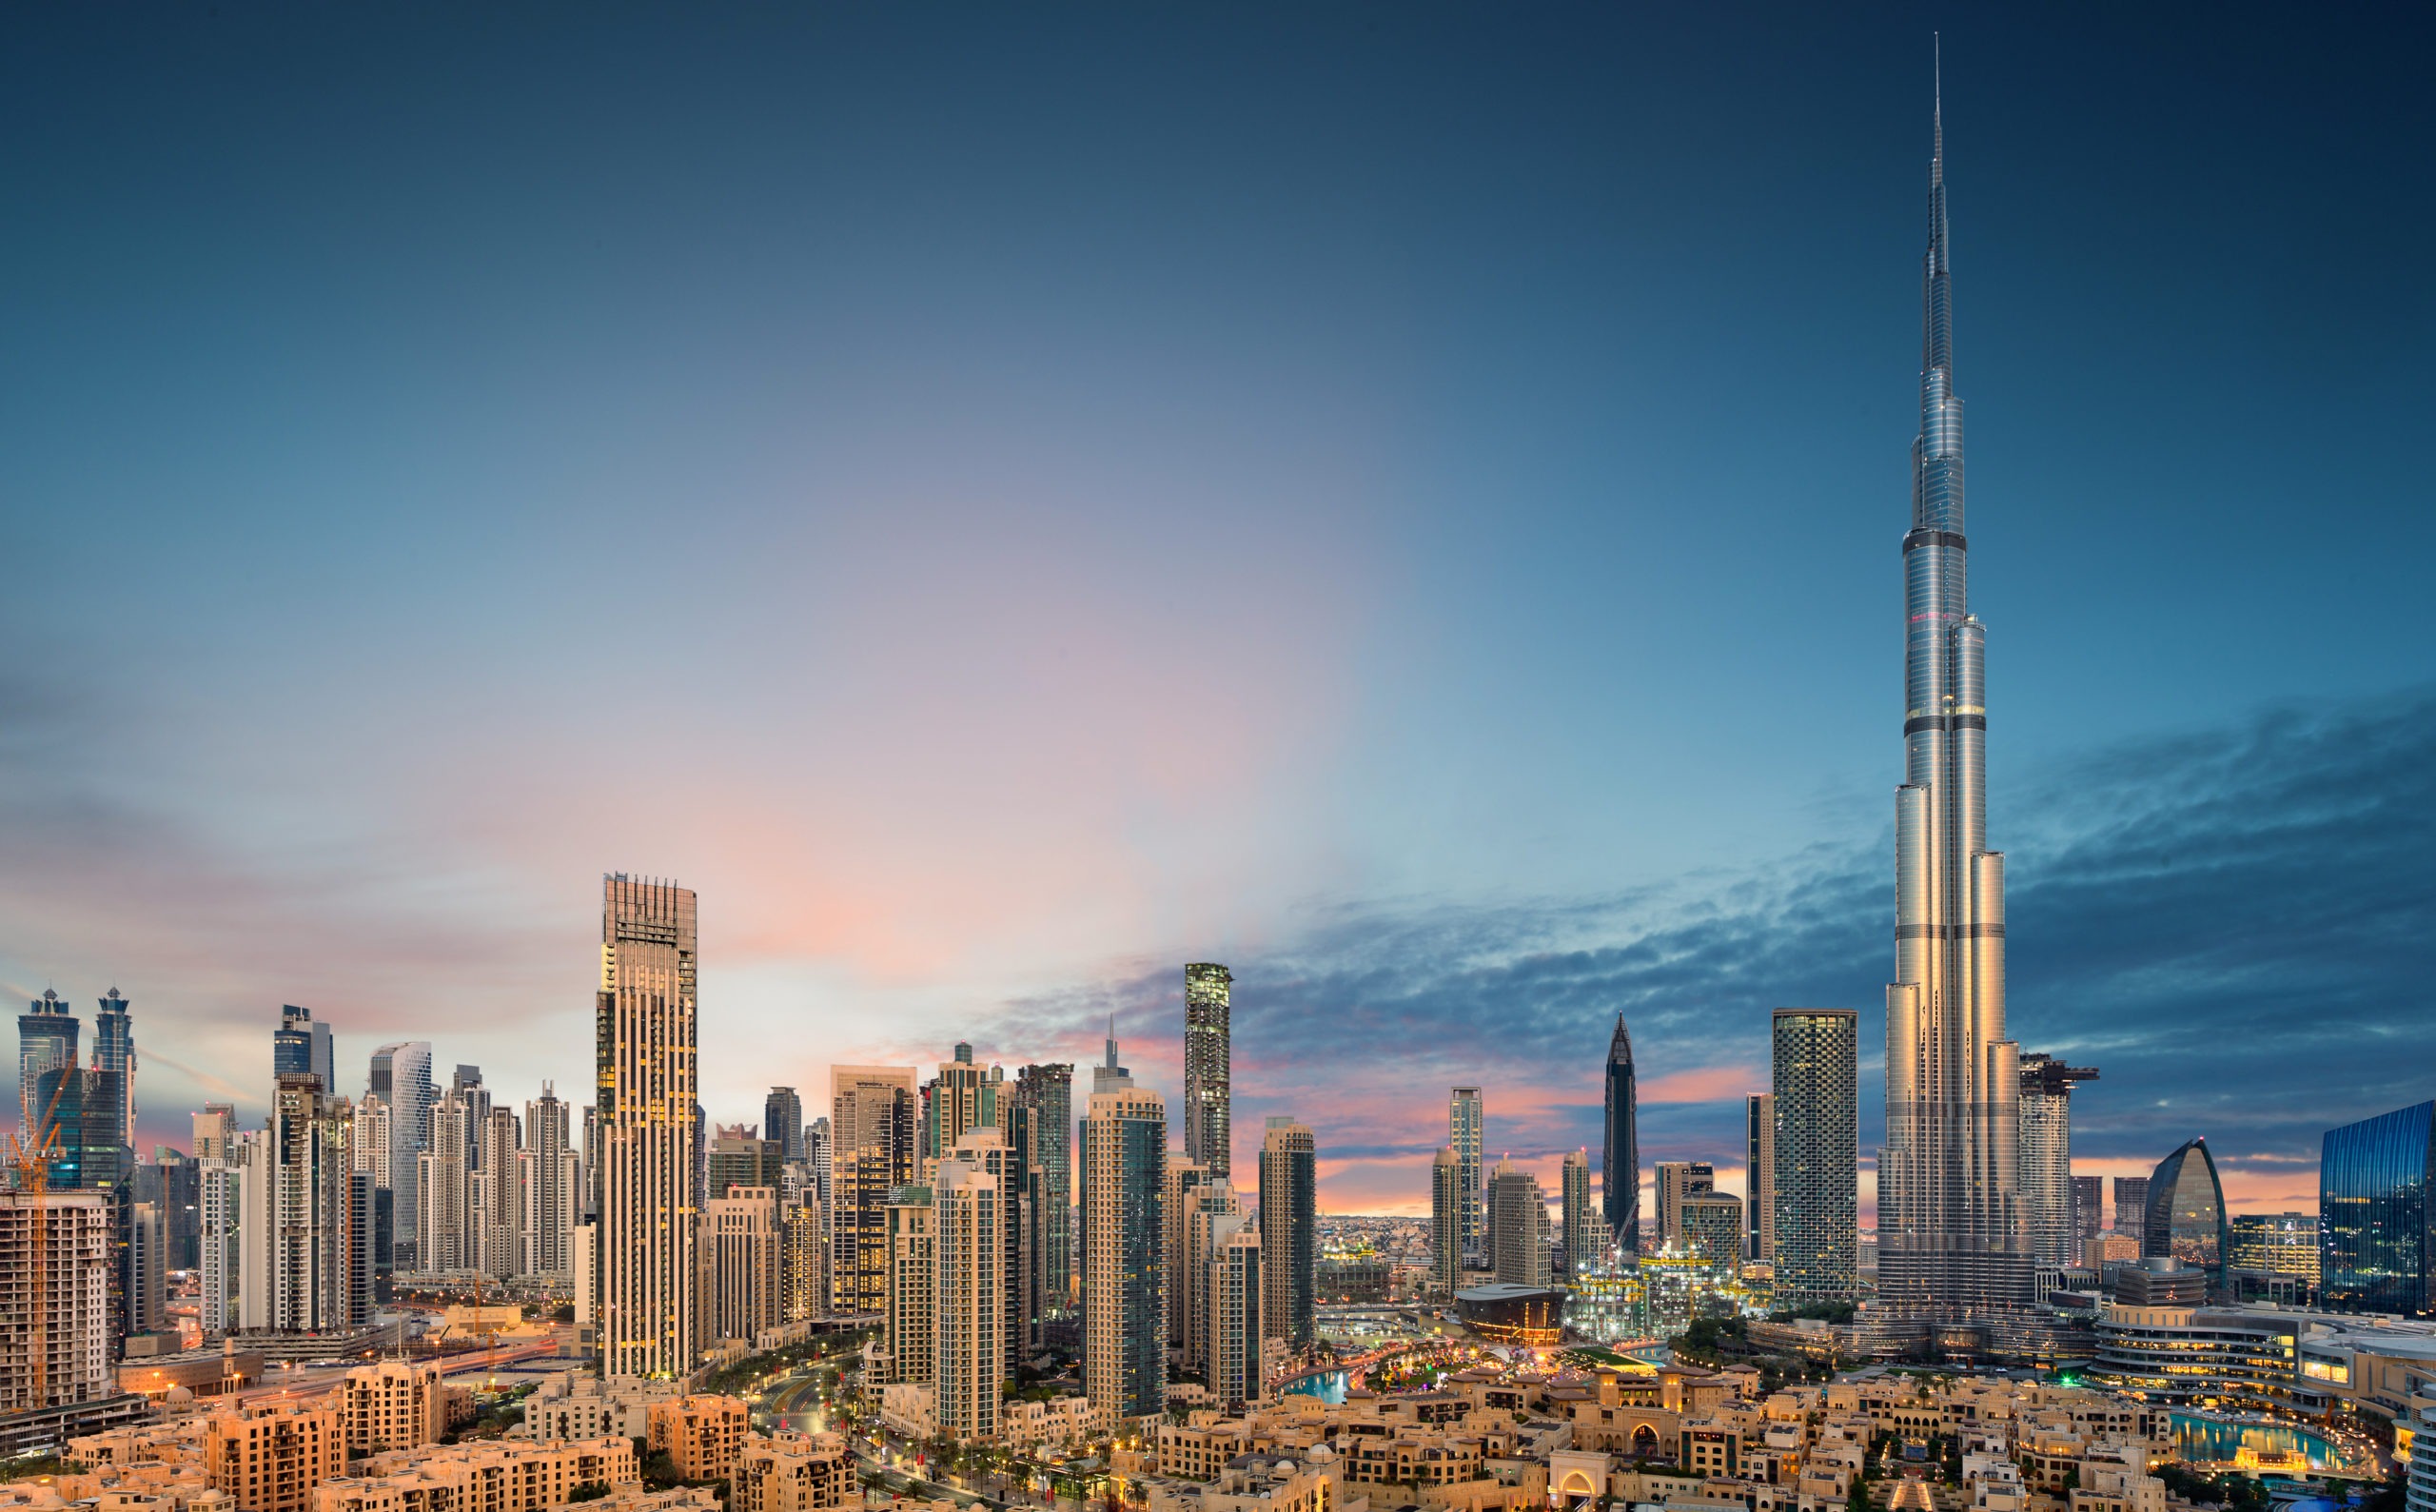 The beautiful skyline of Dubai, UAE